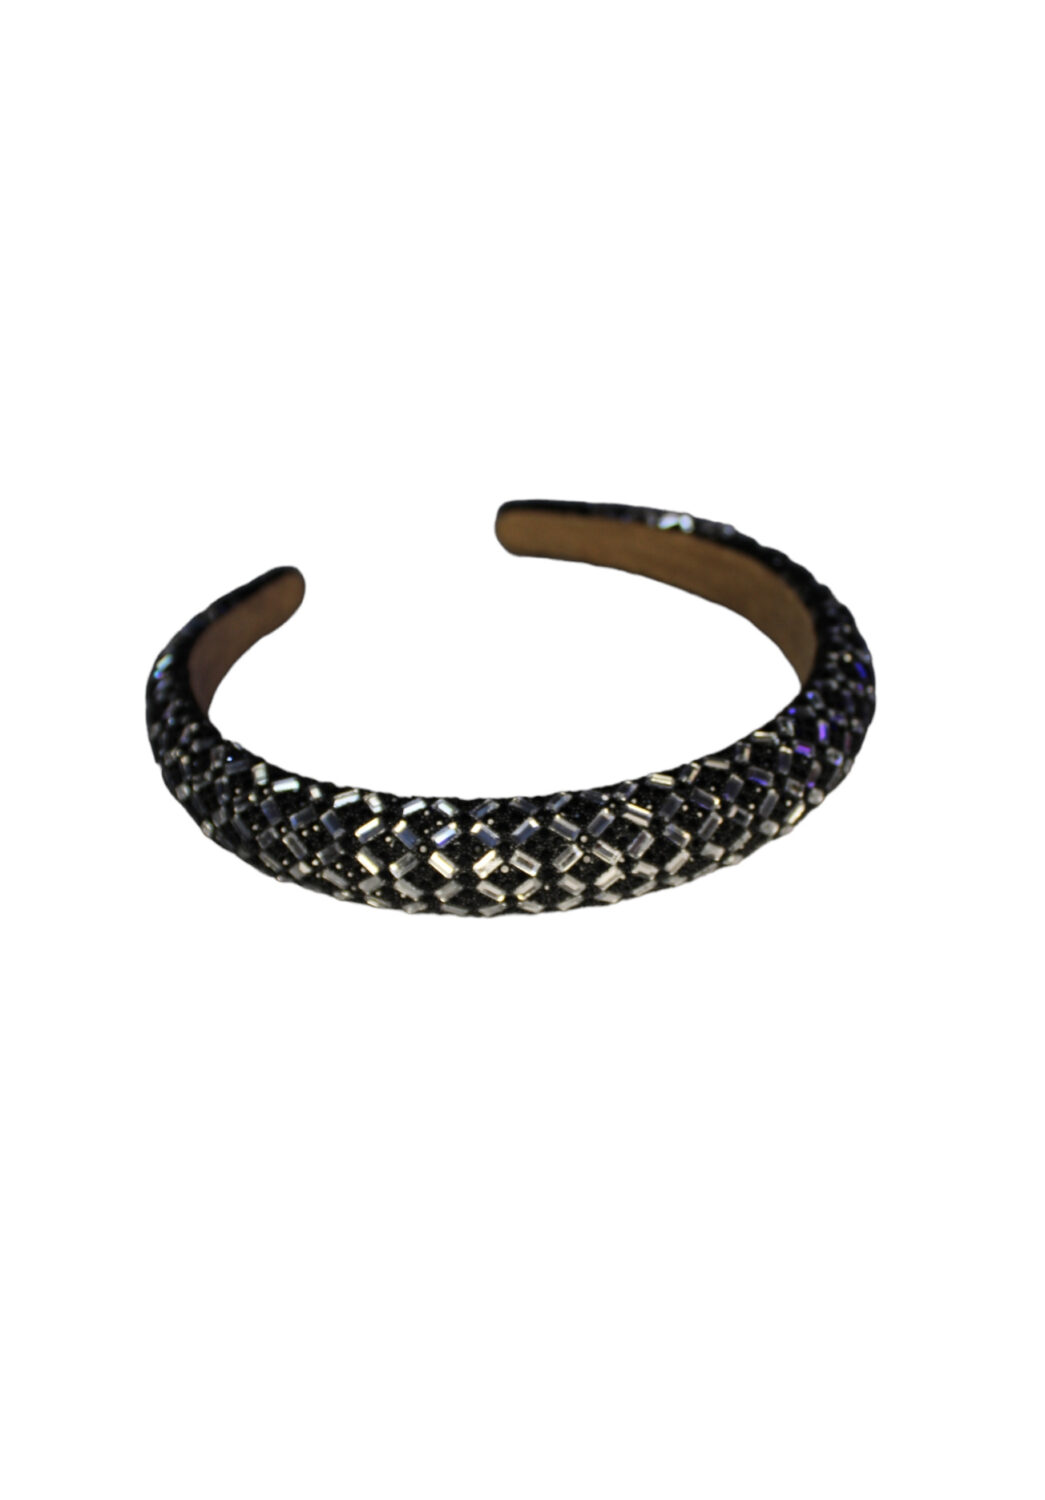 Black Headband with crystals